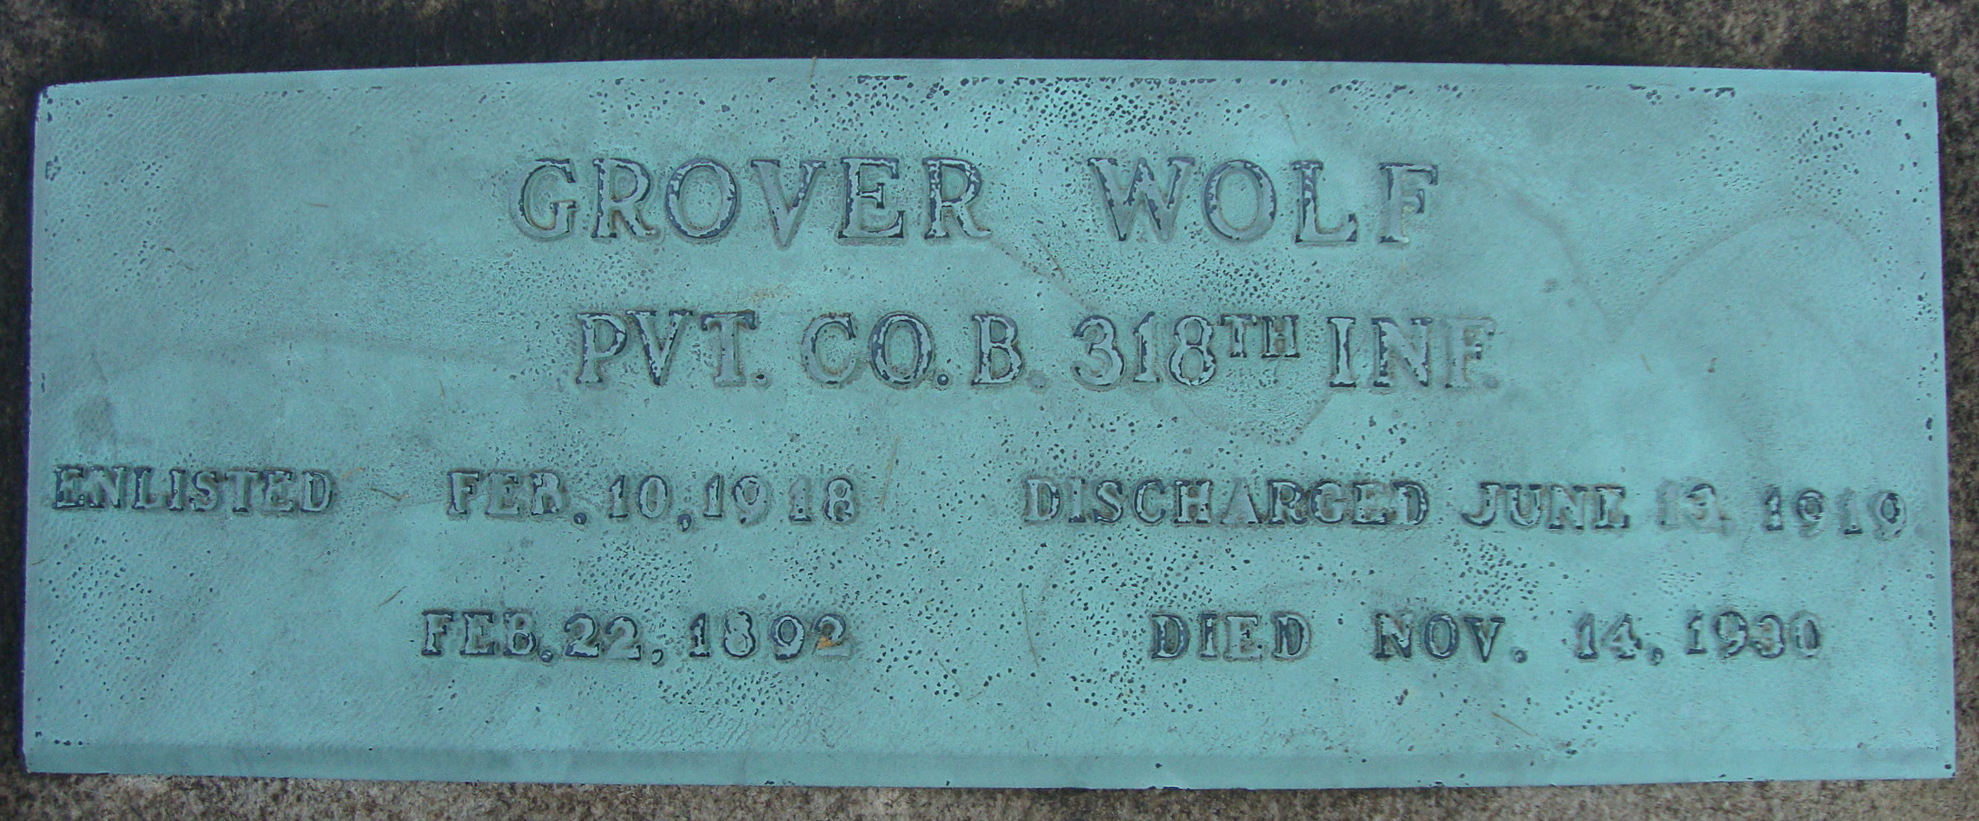 Patrolman Grover C. Wolf | McKees Rocks Borough Police Department, Pennsylvania